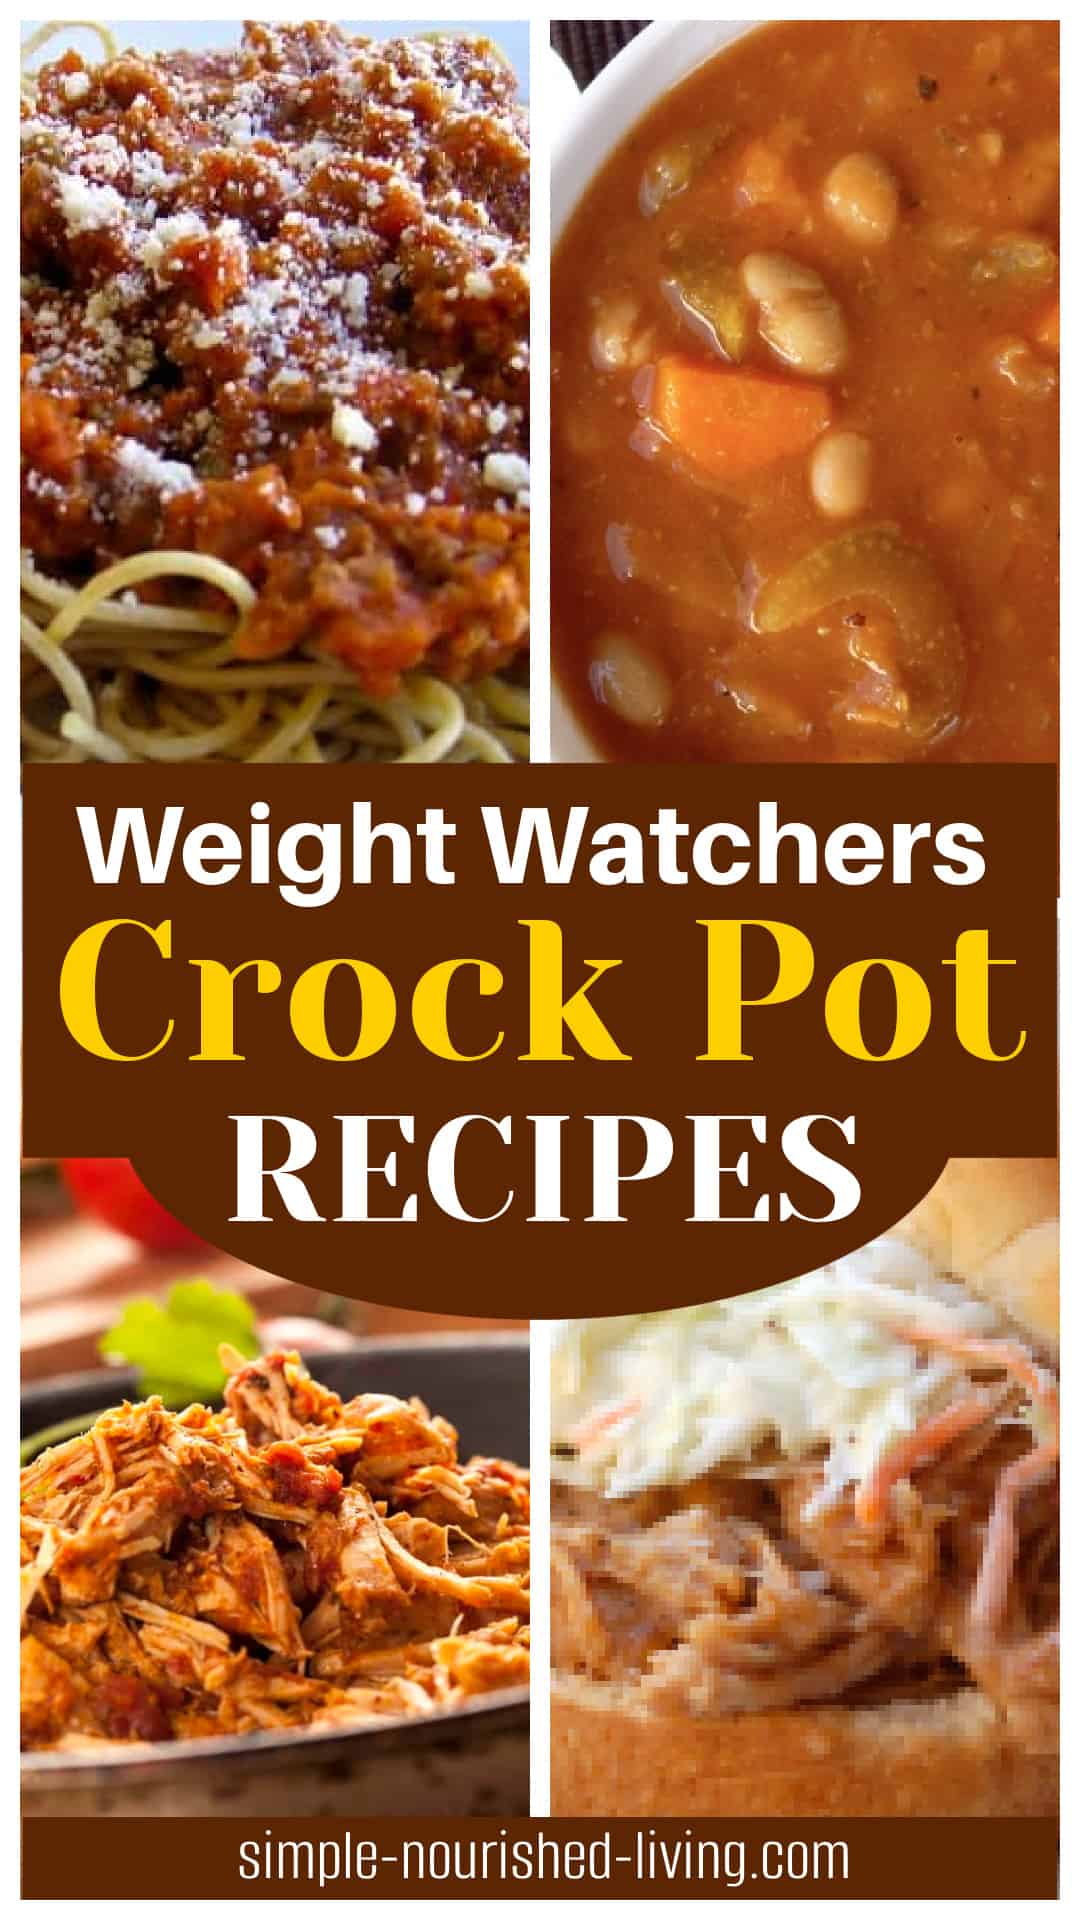 https://simple-nourished-living.com/wp-content/uploads/2022/08/Weight-Watchers-Crock-Pot-Recipes-Pin.jpg